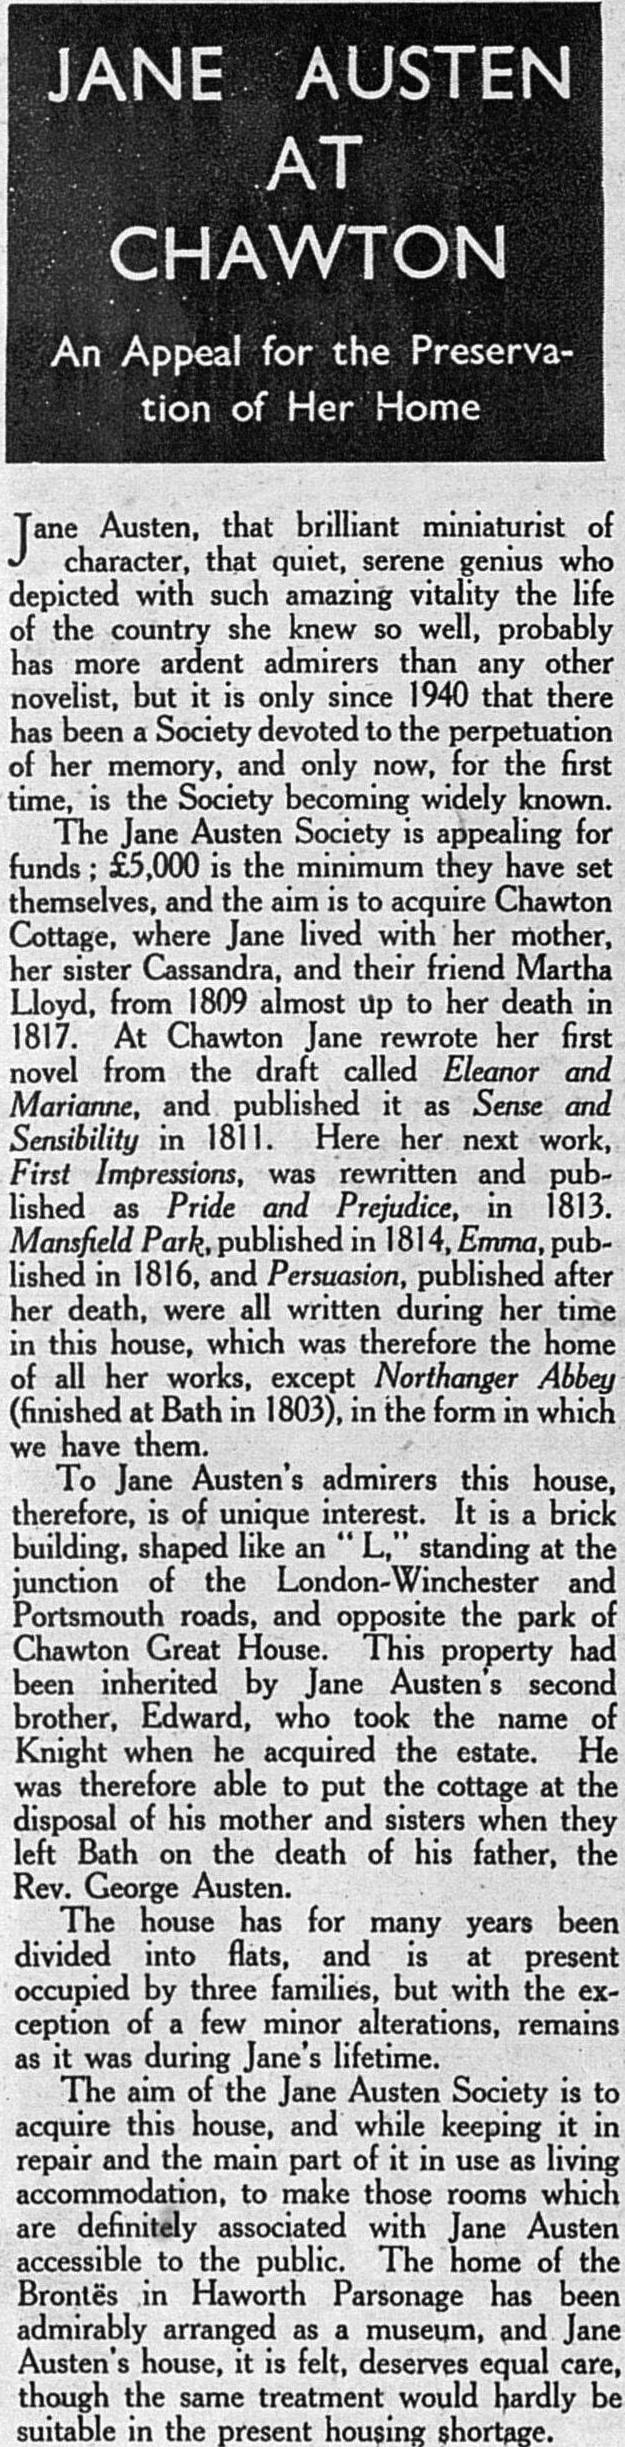 Preserving Jane Austen's home